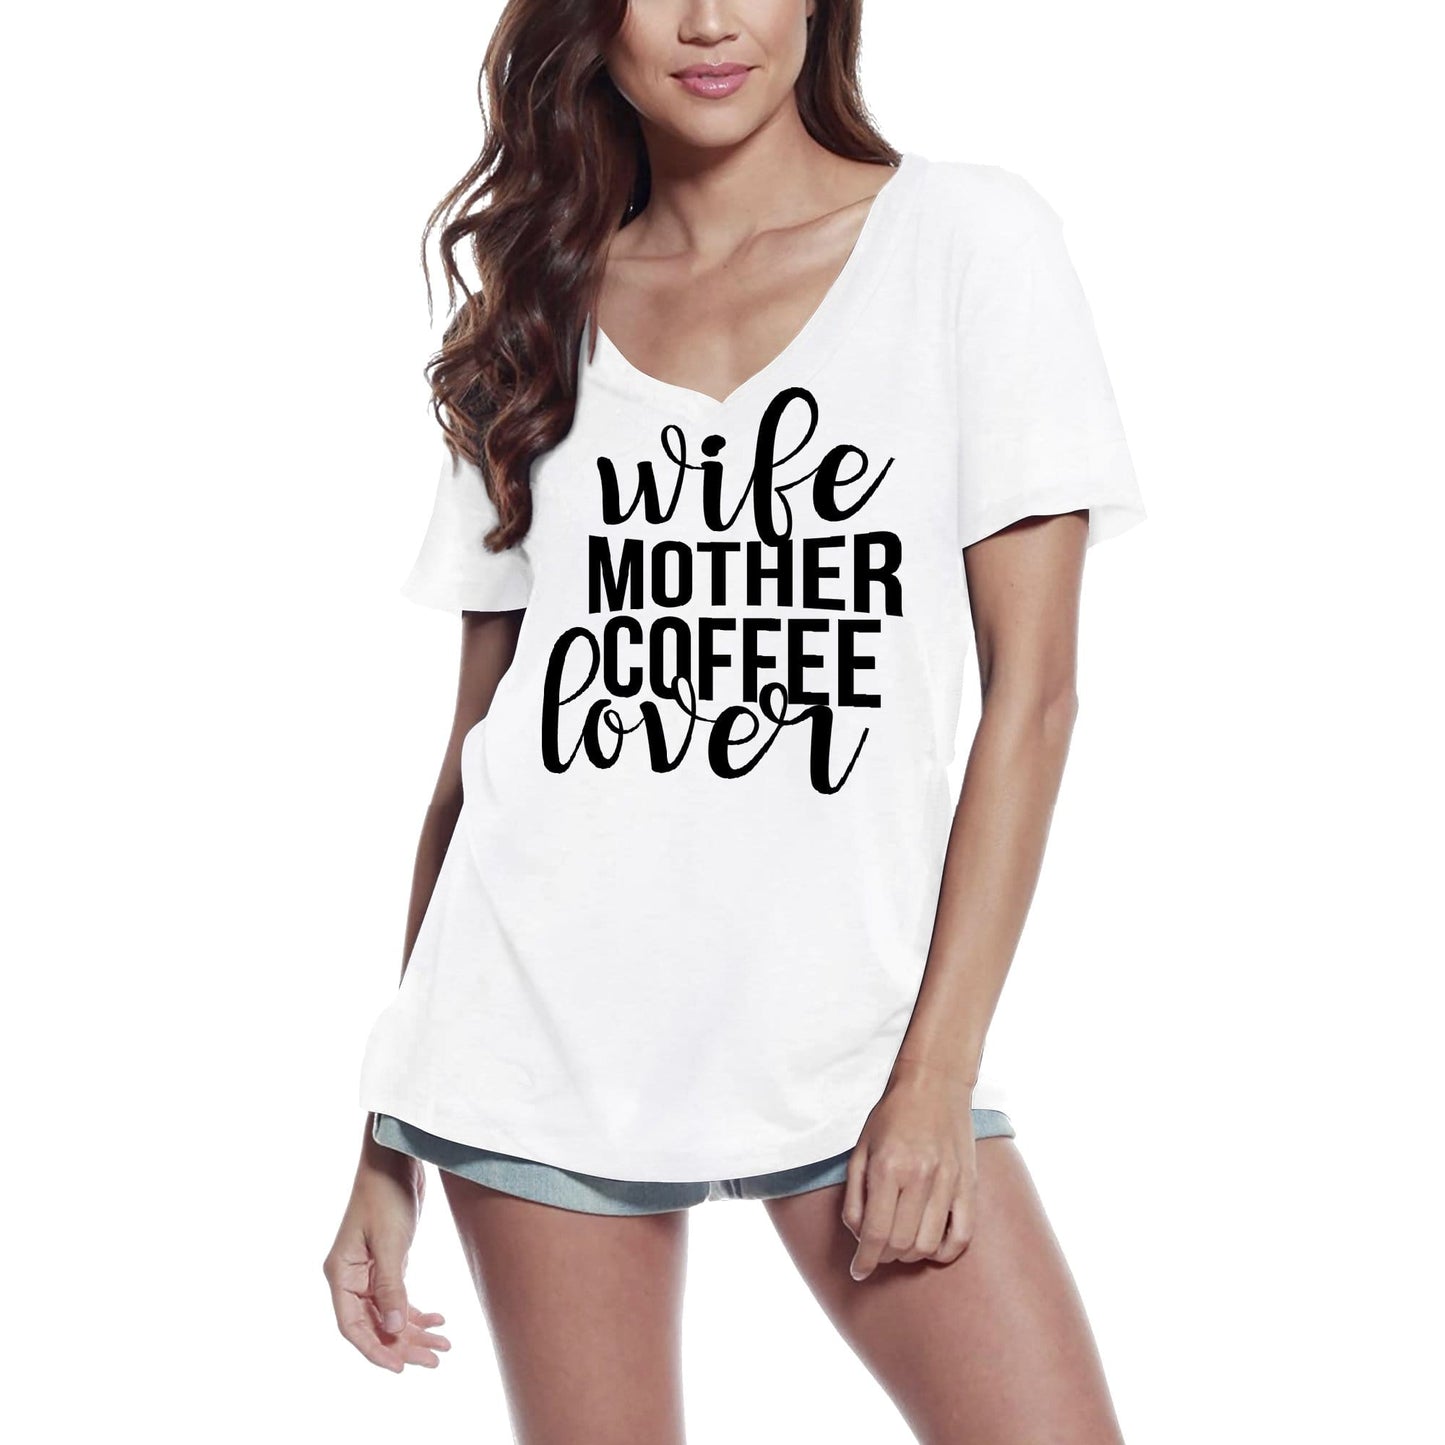 ULTRABASIC Women's T-Shirt Wife Mother Coffee Lover - Funny Short Sleeve Tee Shirt Tops